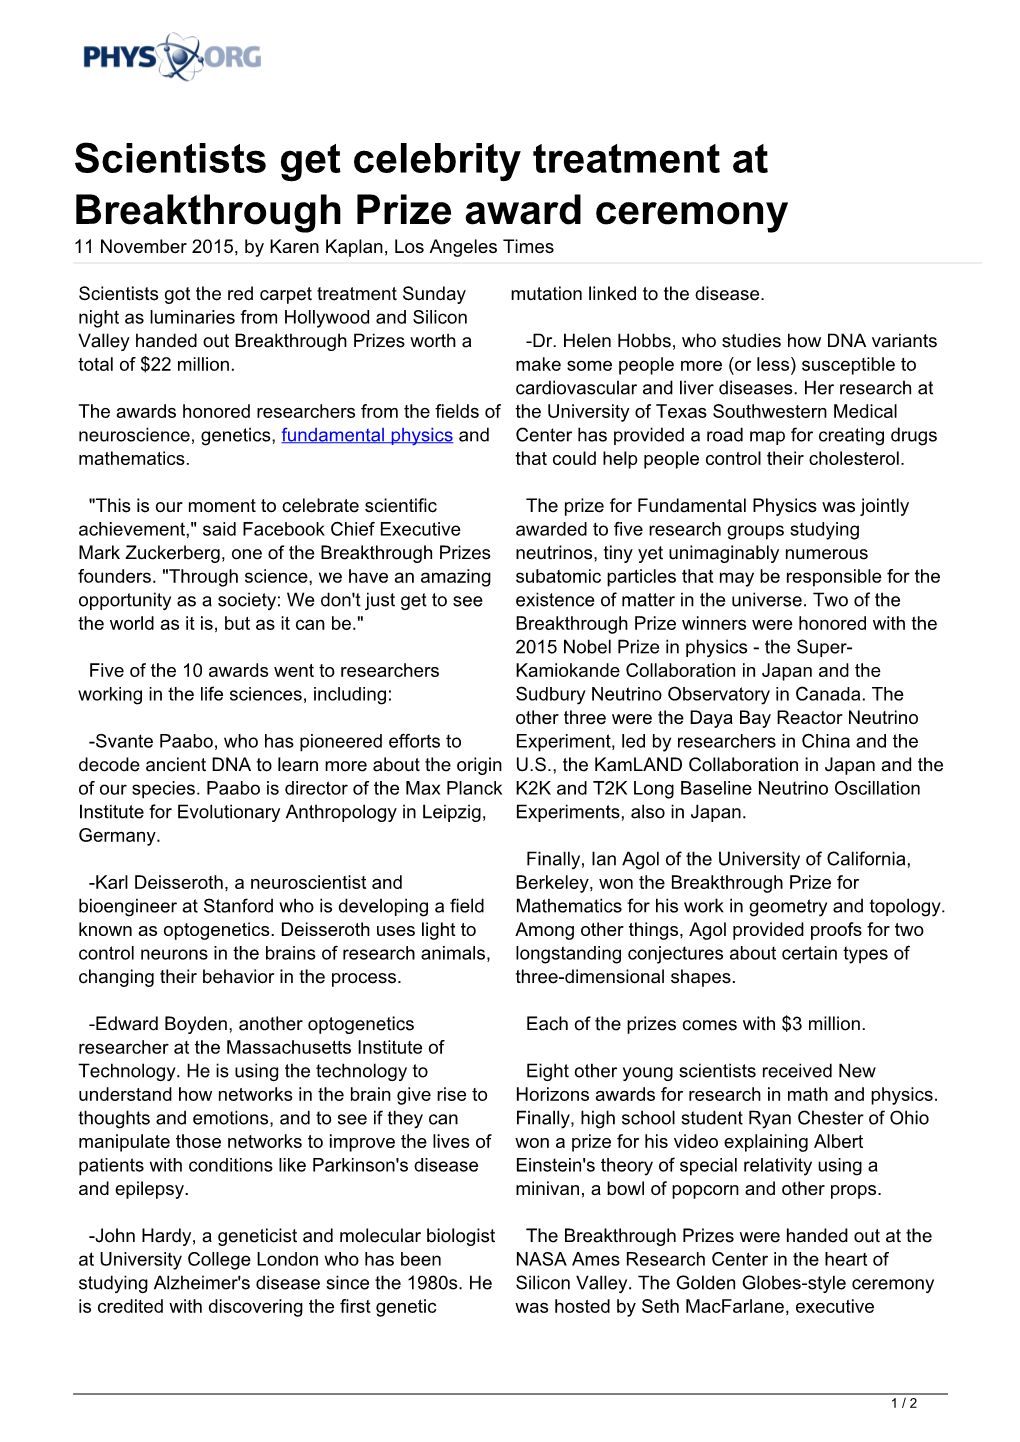 Scientists Get Celebrity Treatment at Breakthrough Prize Award Ceremony 11 November 2015, by Karen Kaplan, Los Angeles Times